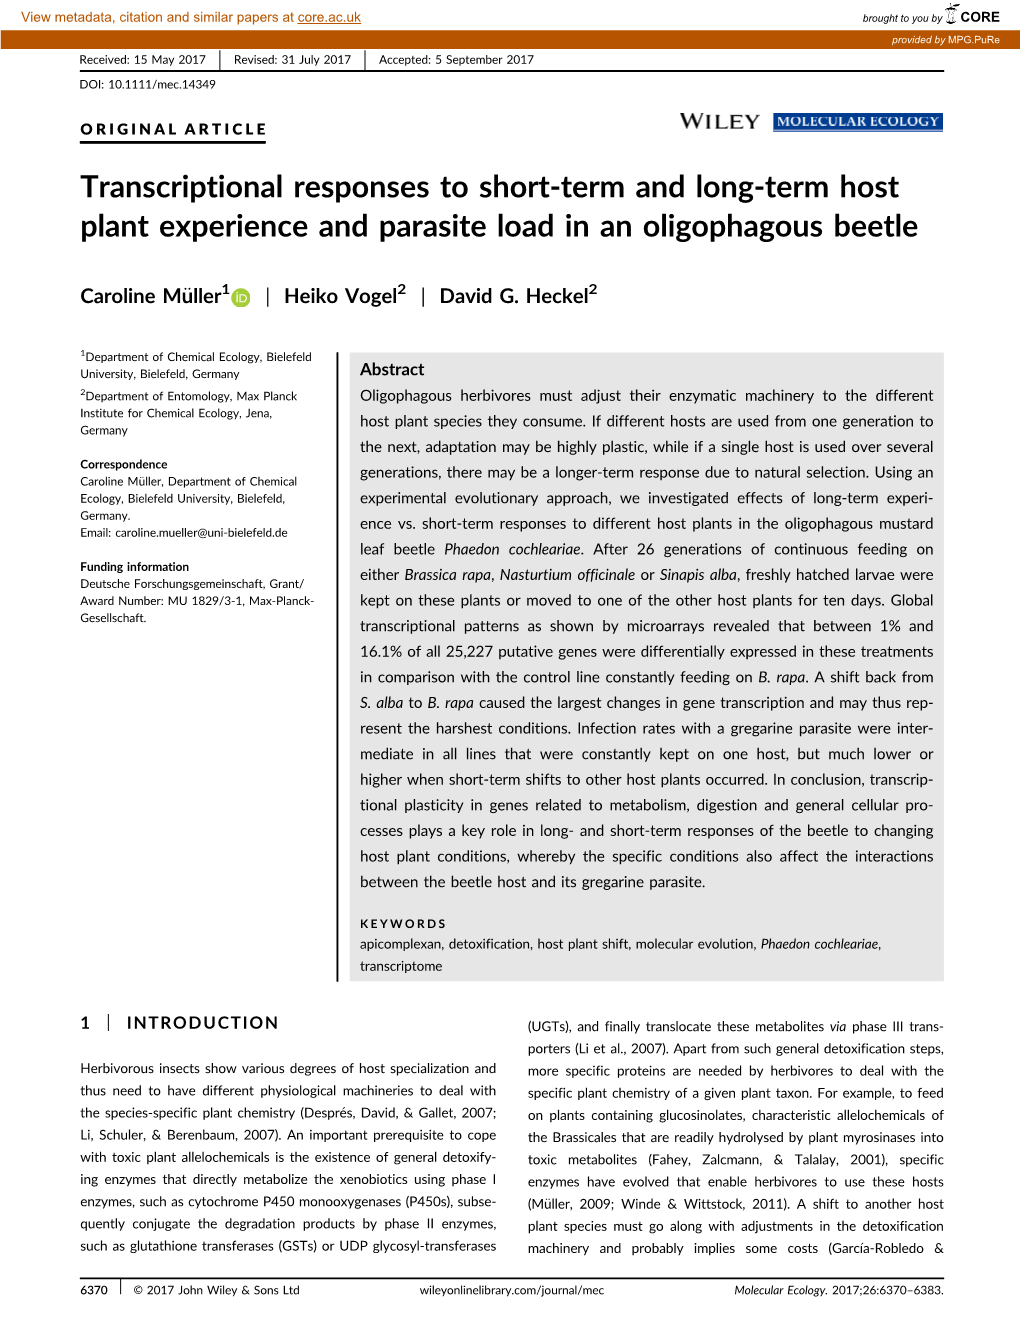 Transcriptional Responses to Short‐Term and Long‐Term Host Plant